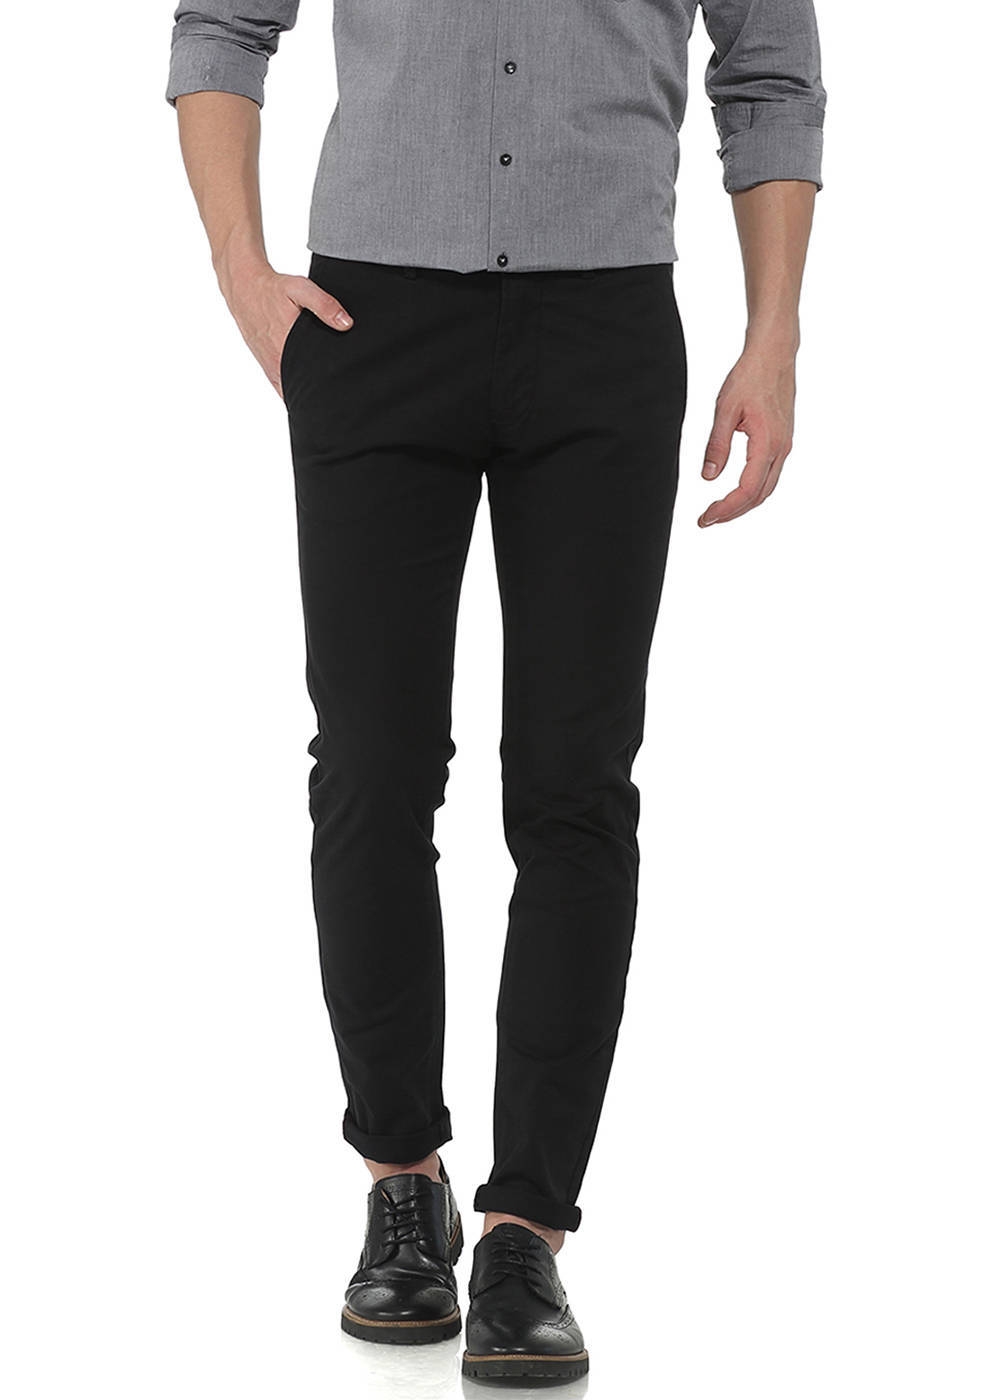 Basics | Basics Tapered Fit Anthracite Black Stretch Trouser